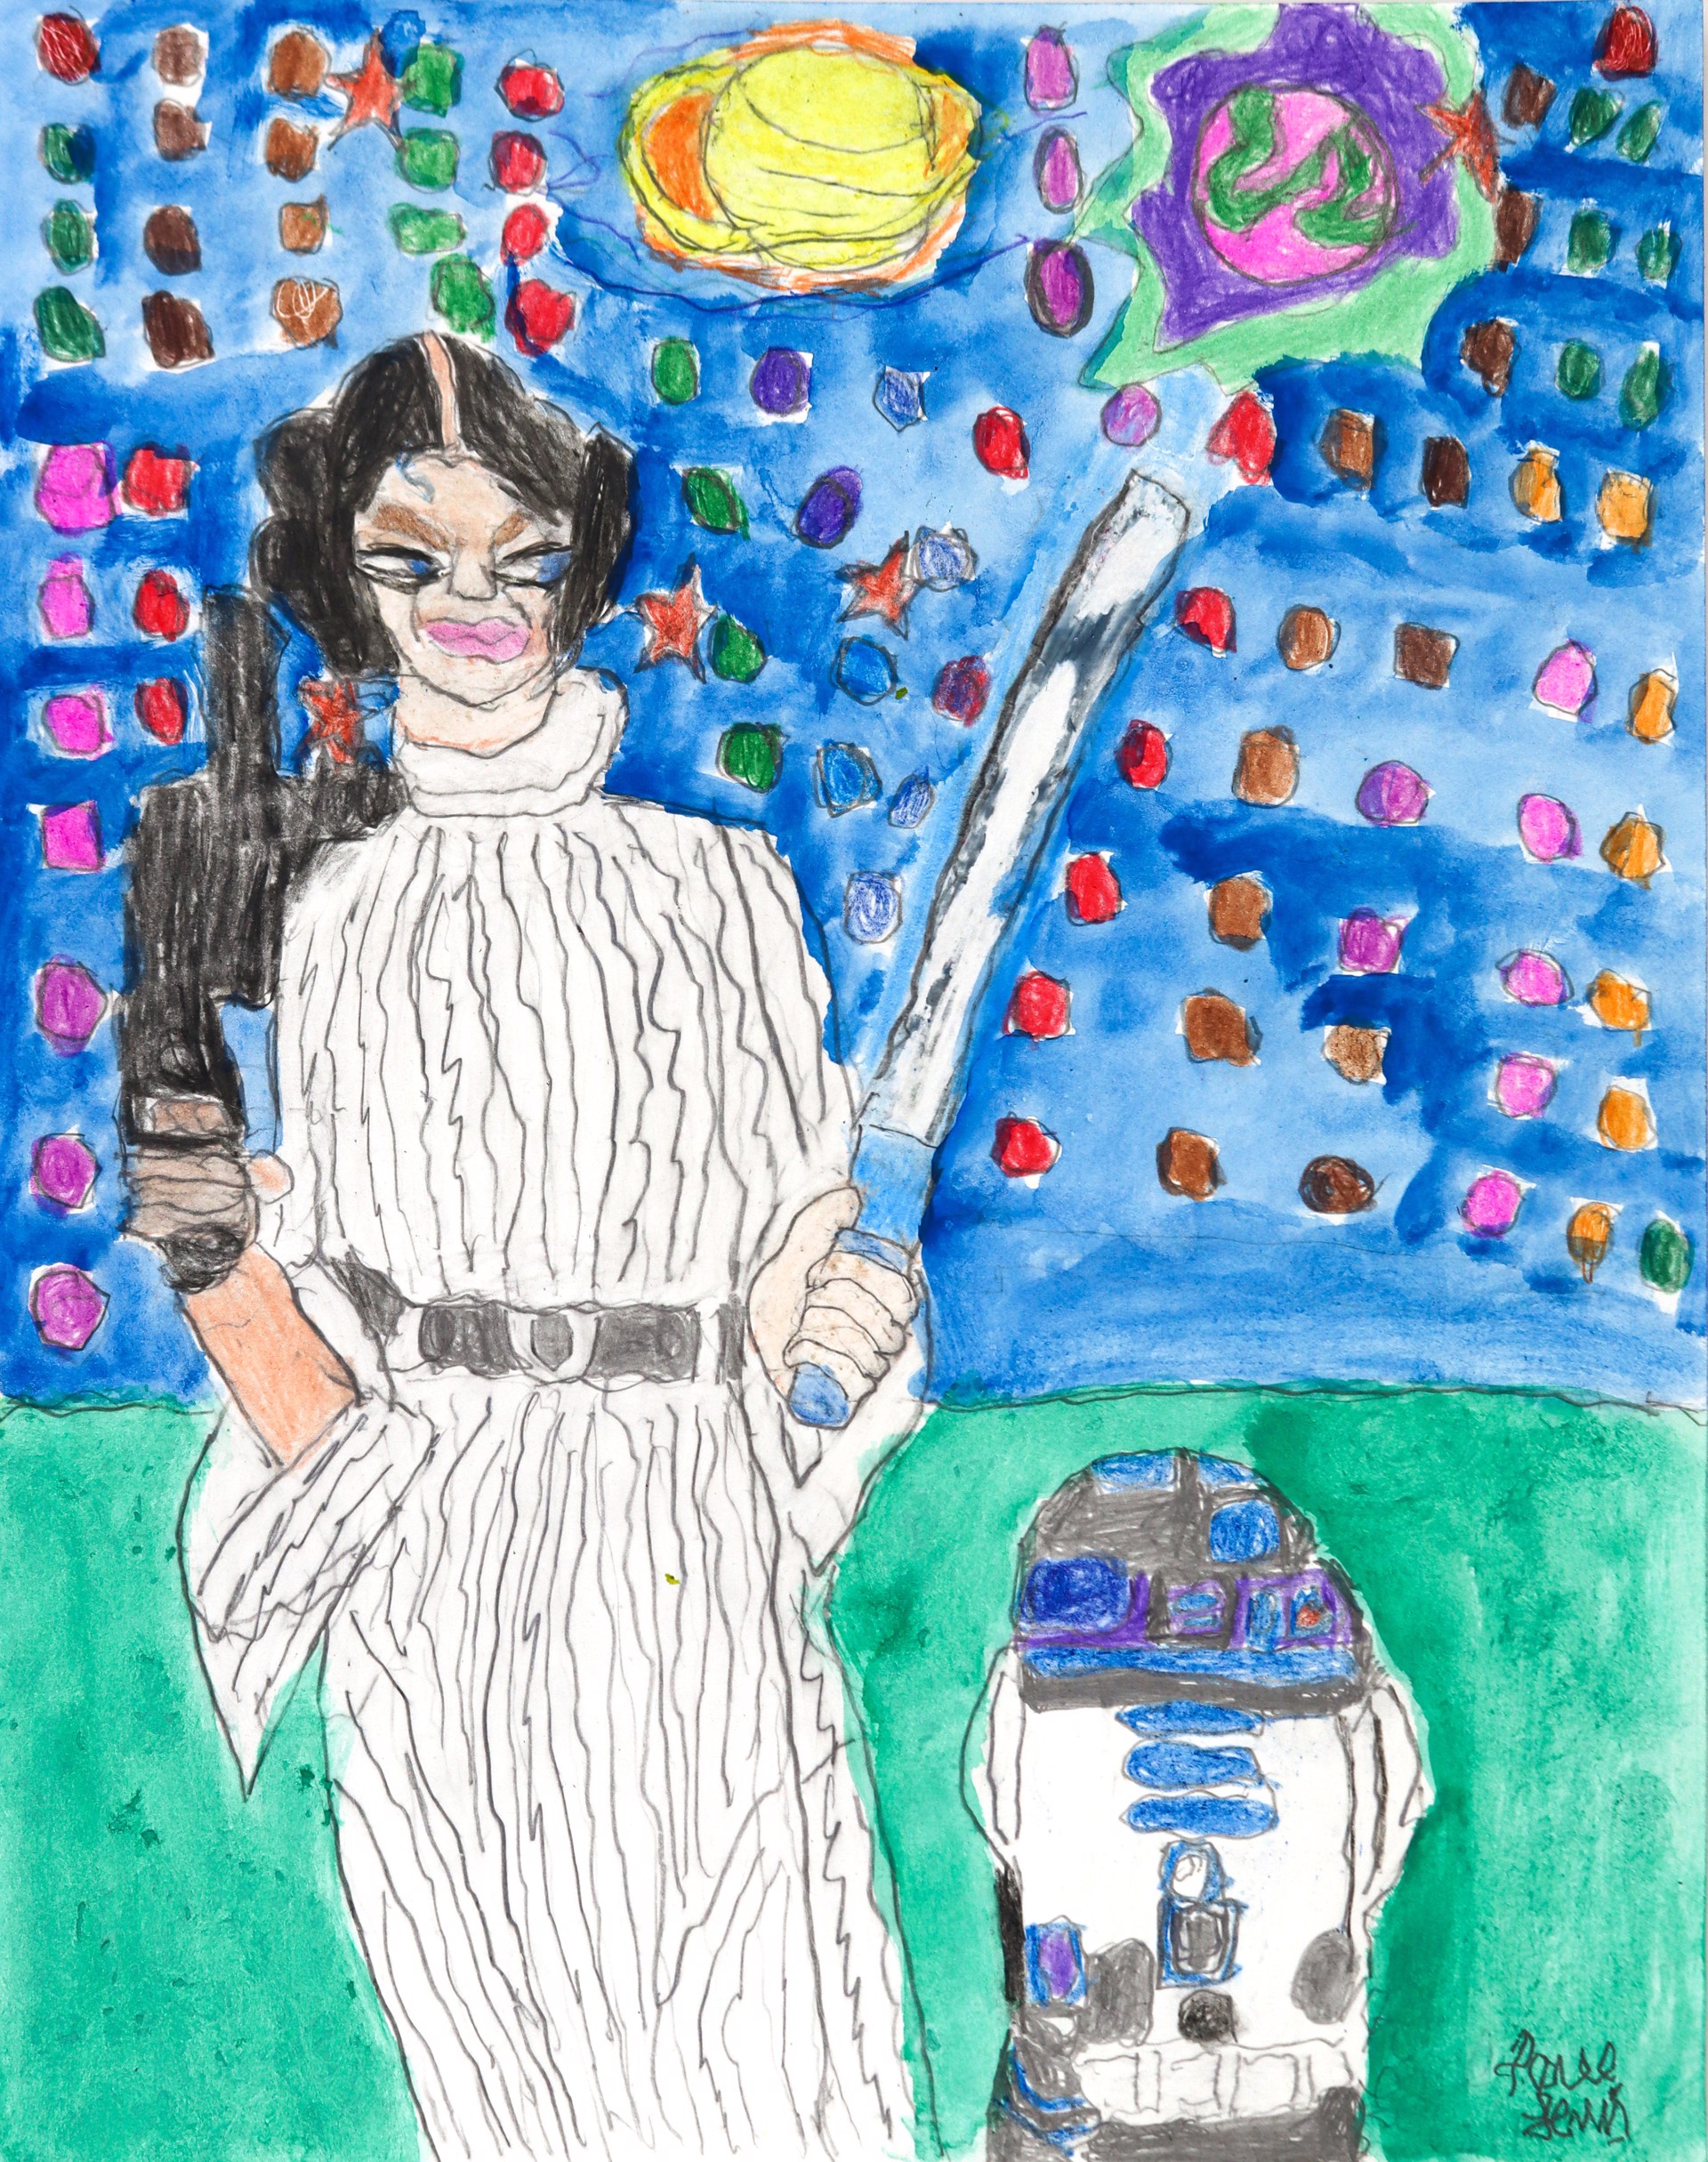 Princess Leia with Gun & Lightsaber & R2D2  by Paul Lewis